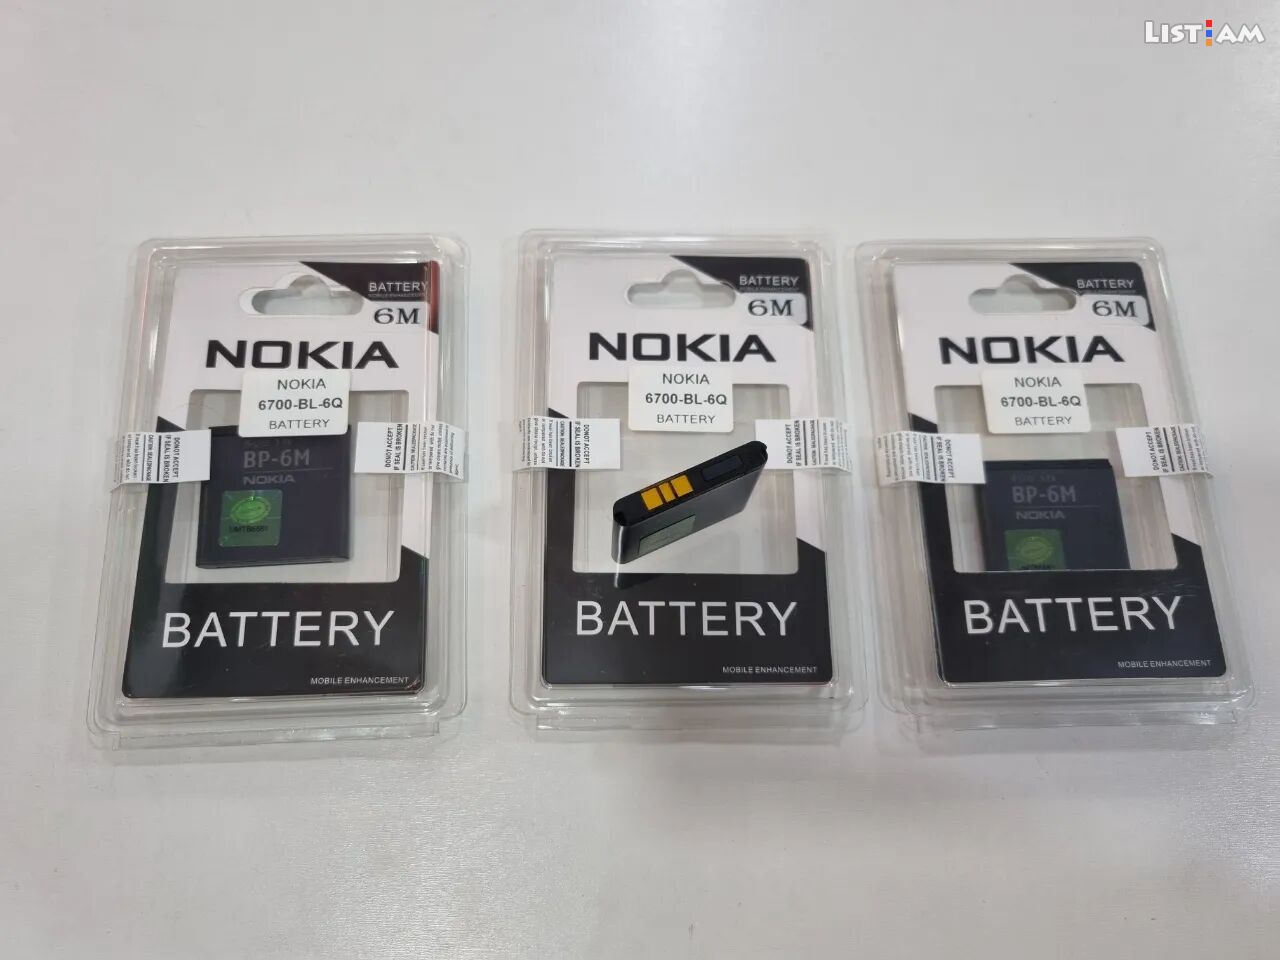 Nokia 6233 battery